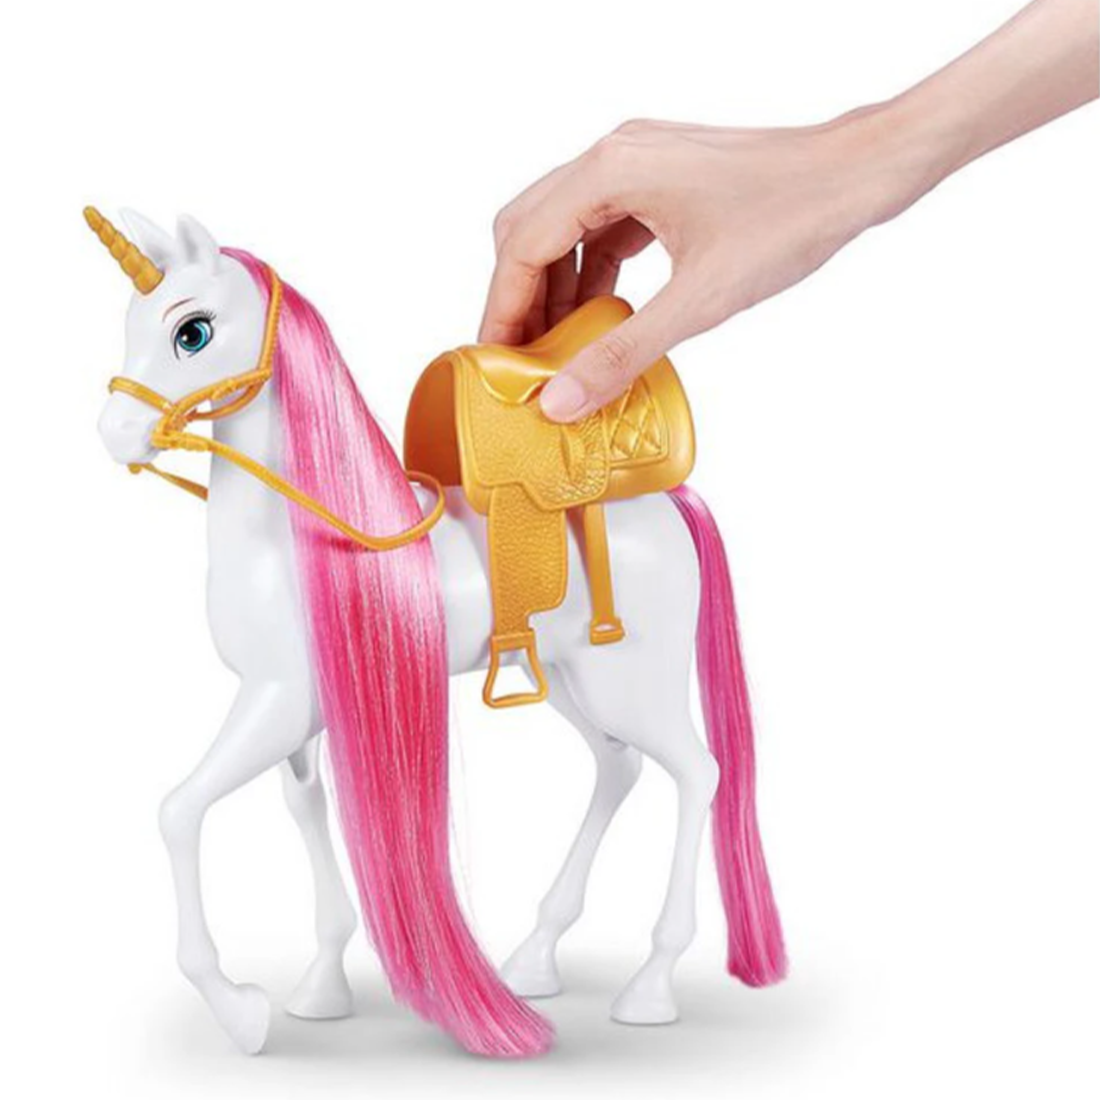 Sparkle Girlz Unicorn and Princess Doll with Carriage Set